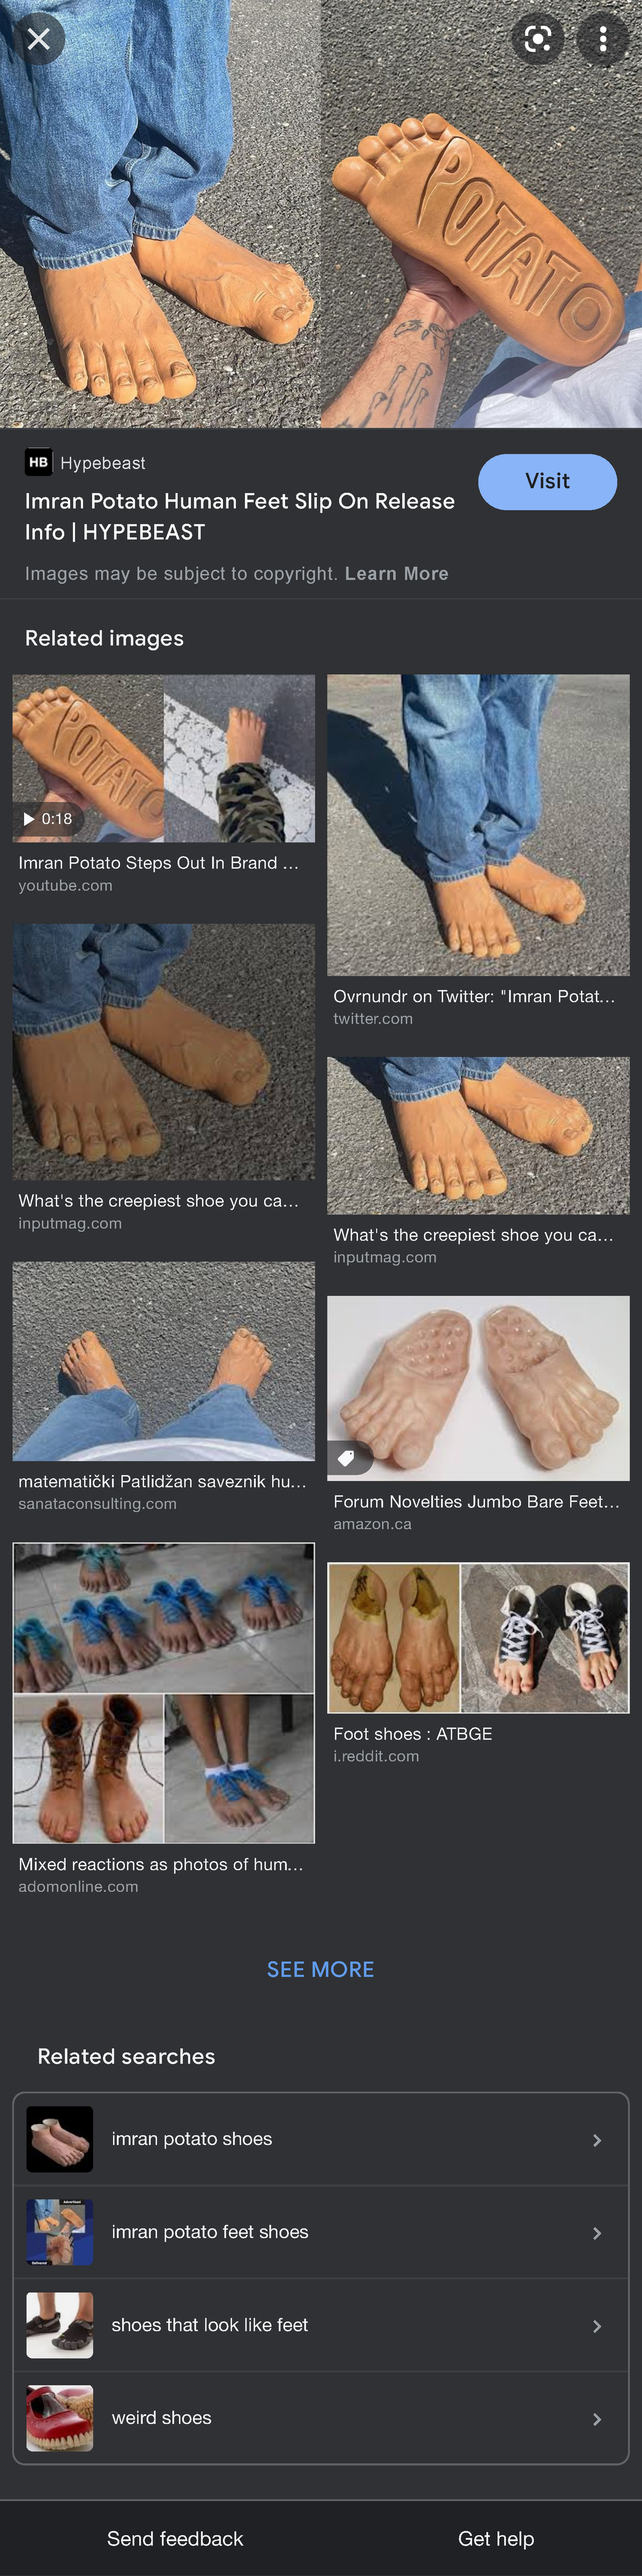 imran potato shoes